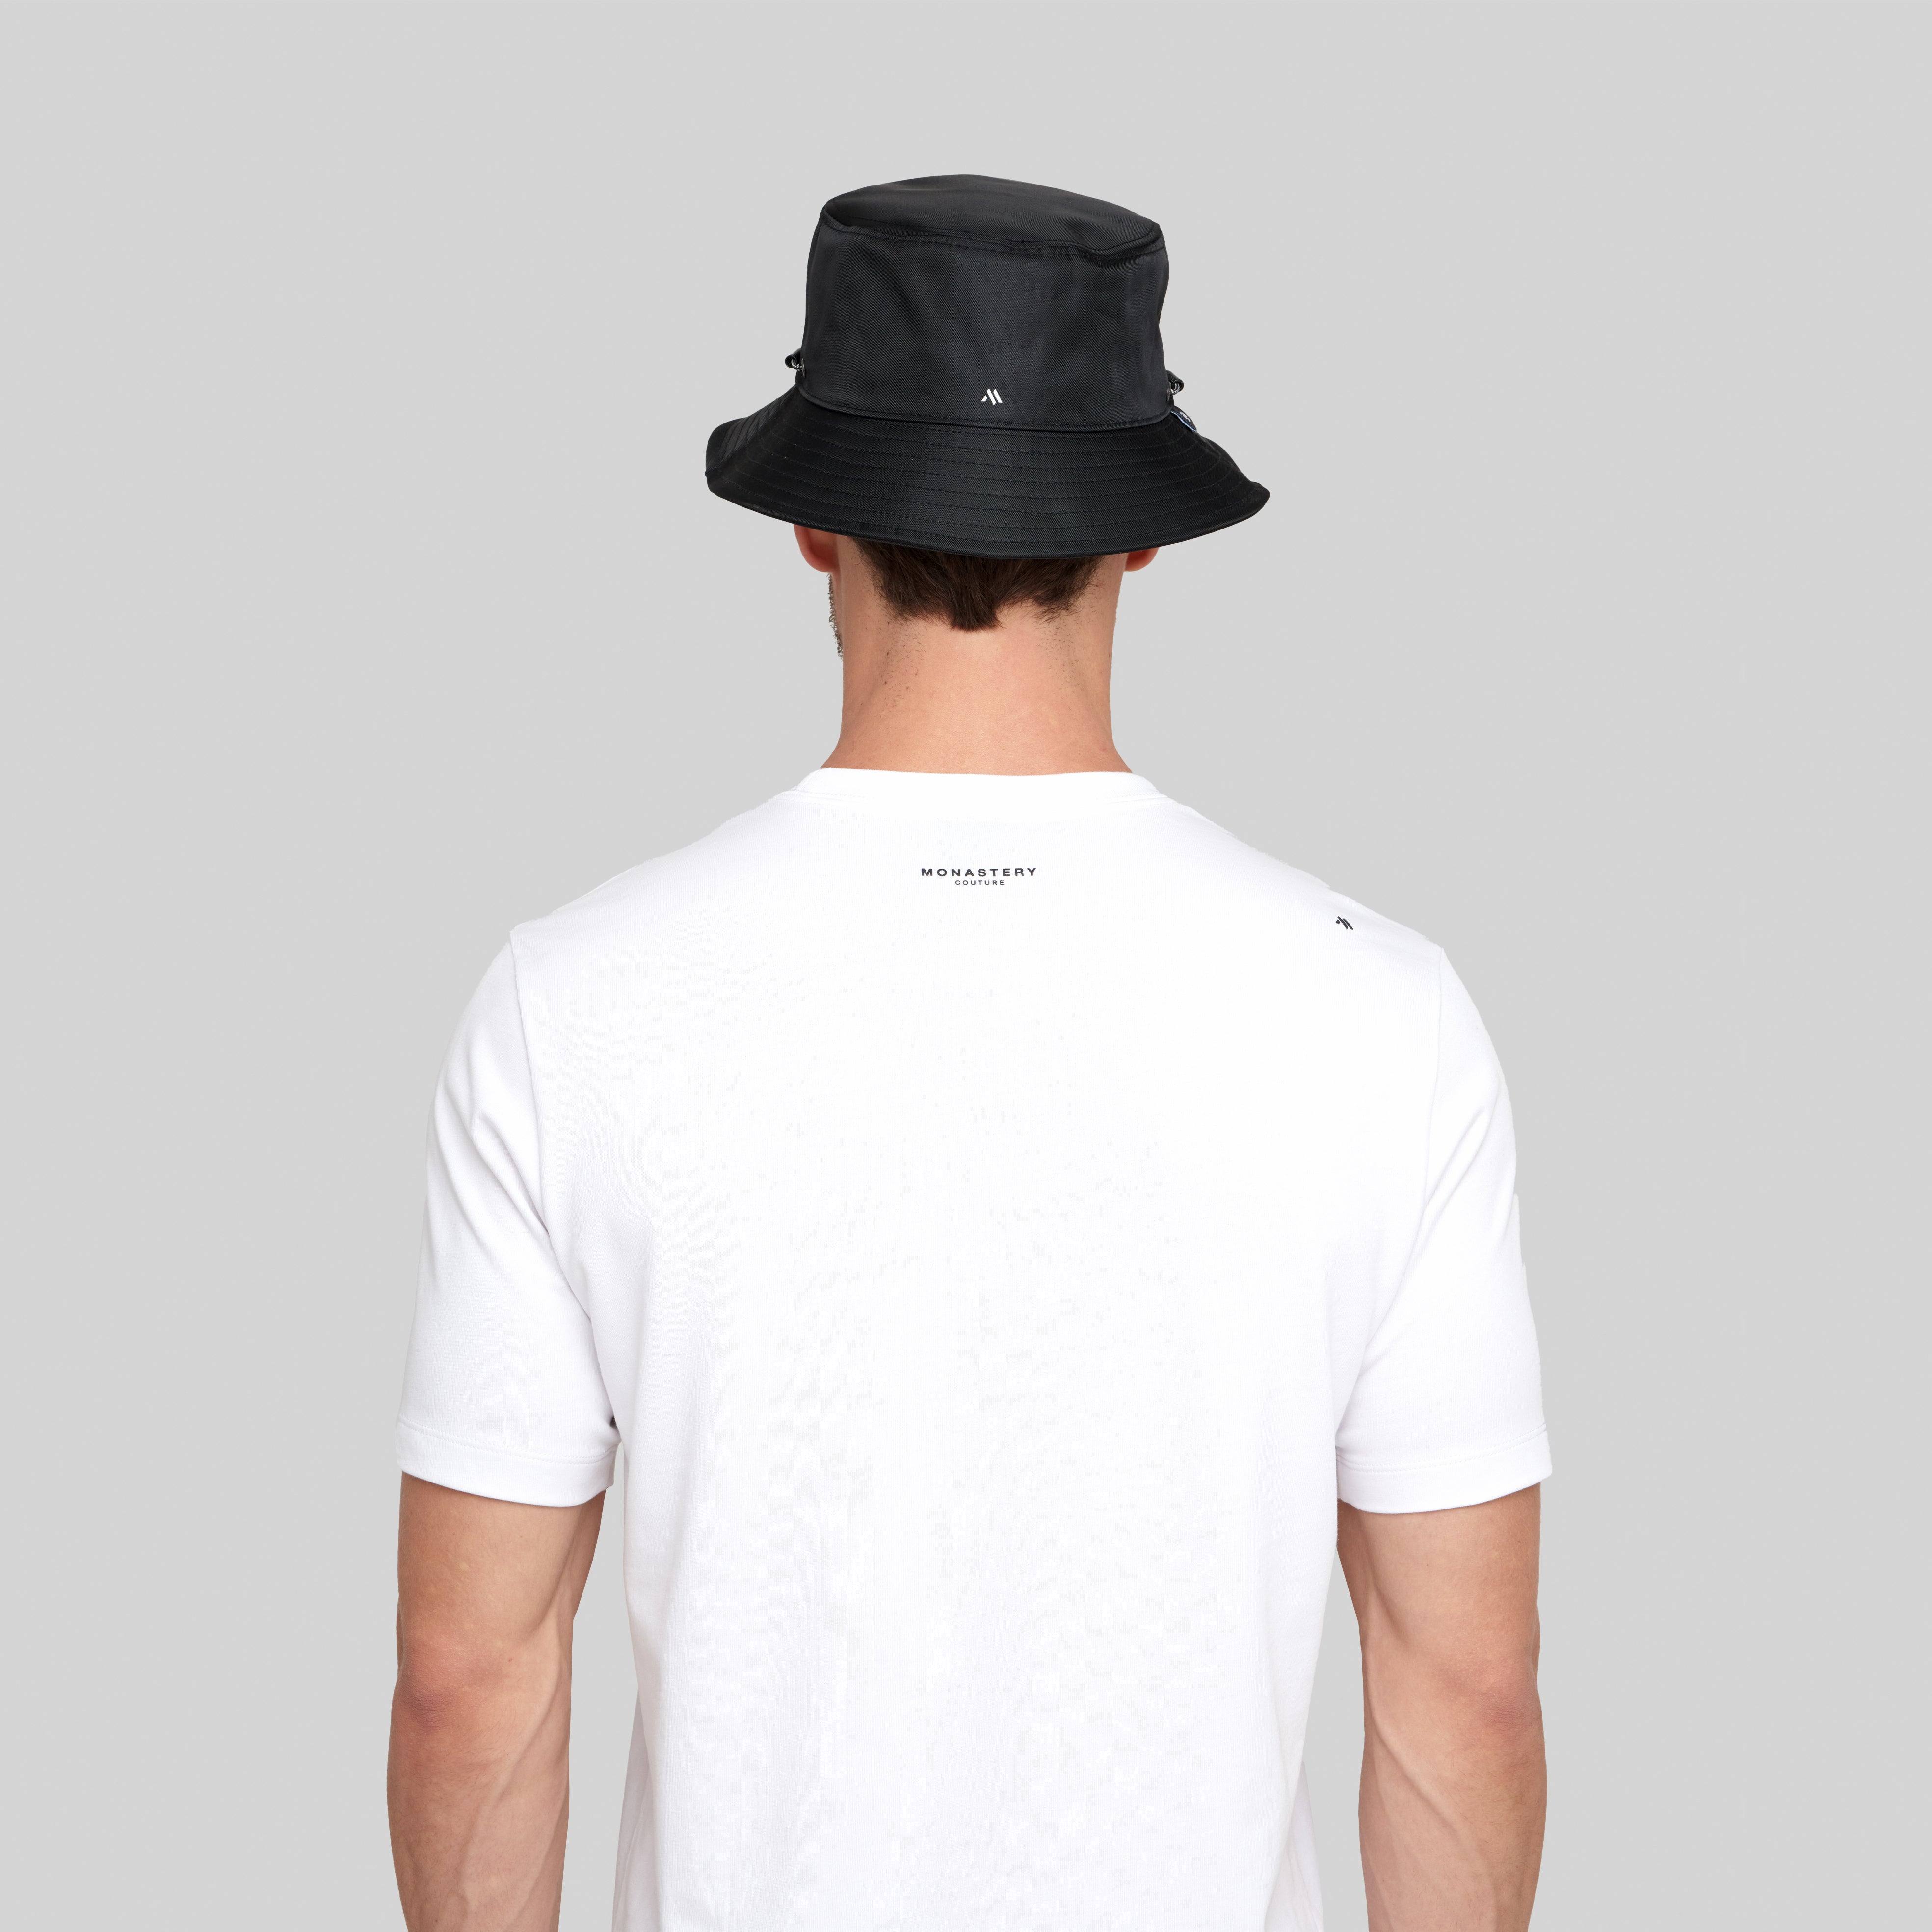 KOTIS BLACK BUCKET HAT | Monastery Couture